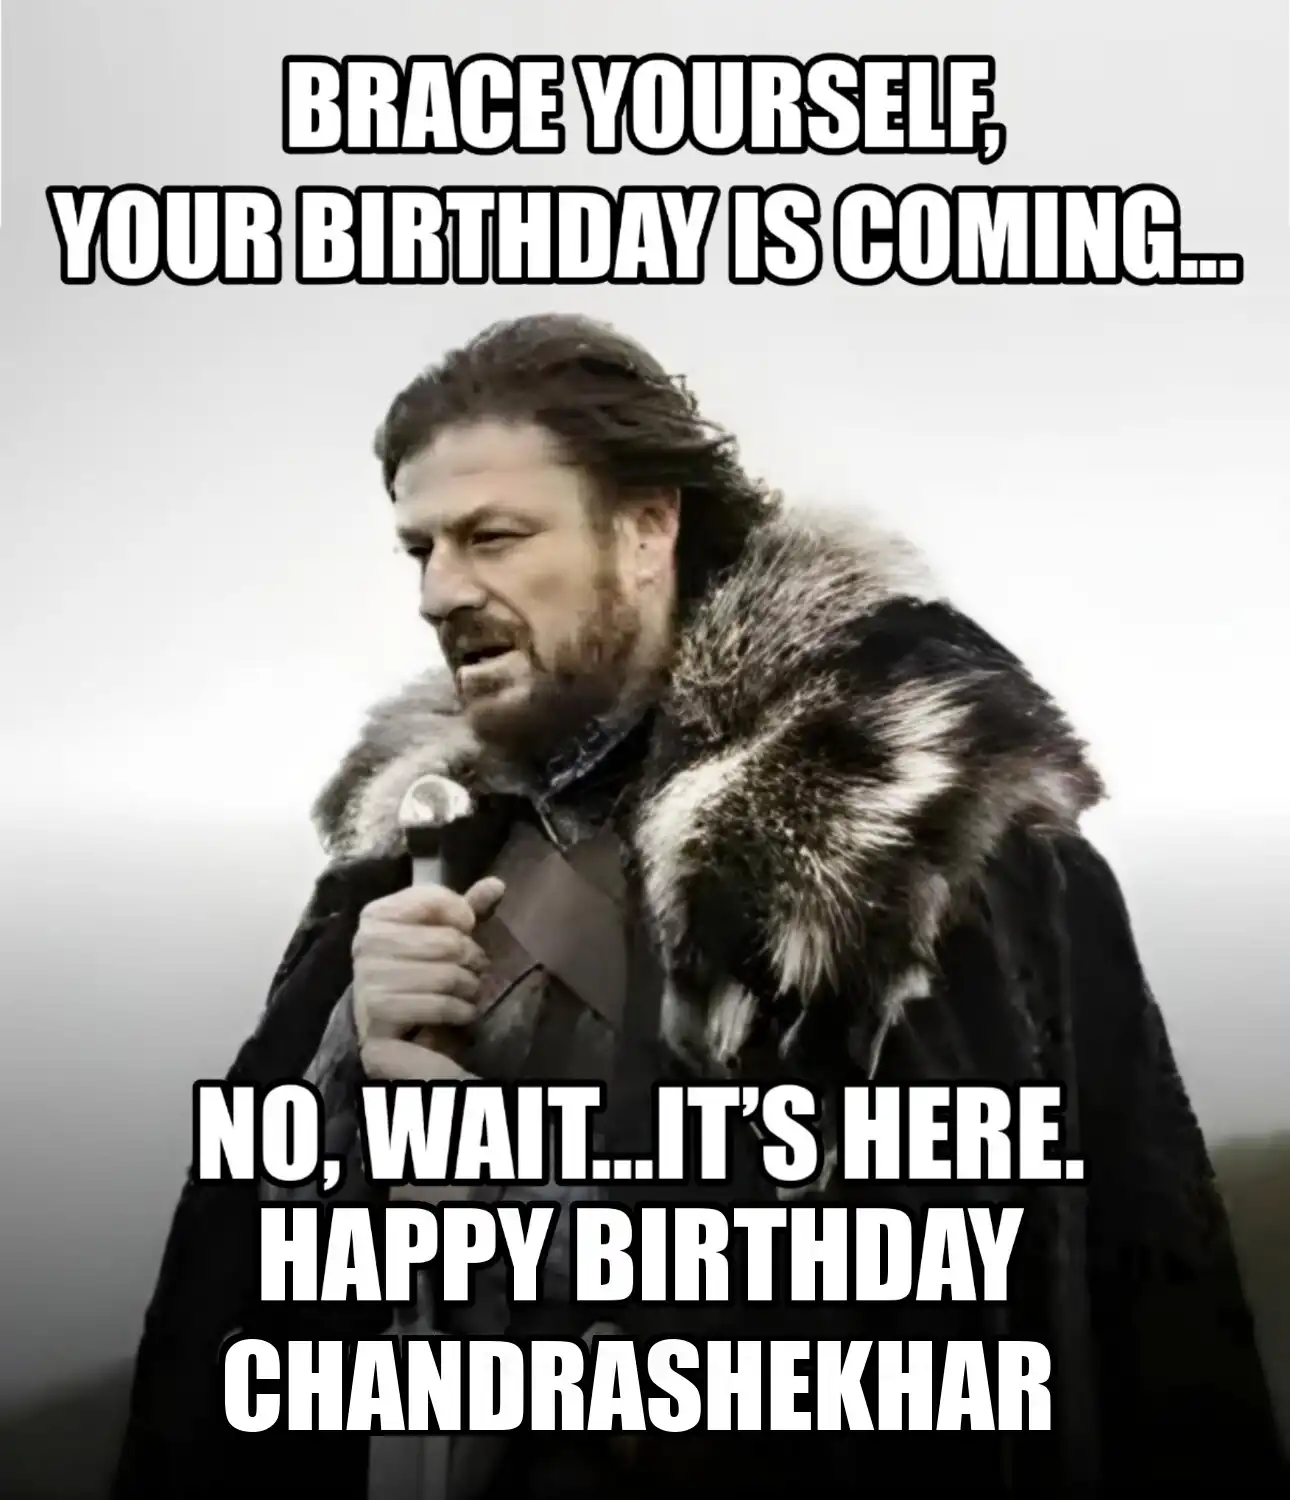 Happy Birthday Chandrashekhar Brace Yourself Your Birthday Is Coming Meme